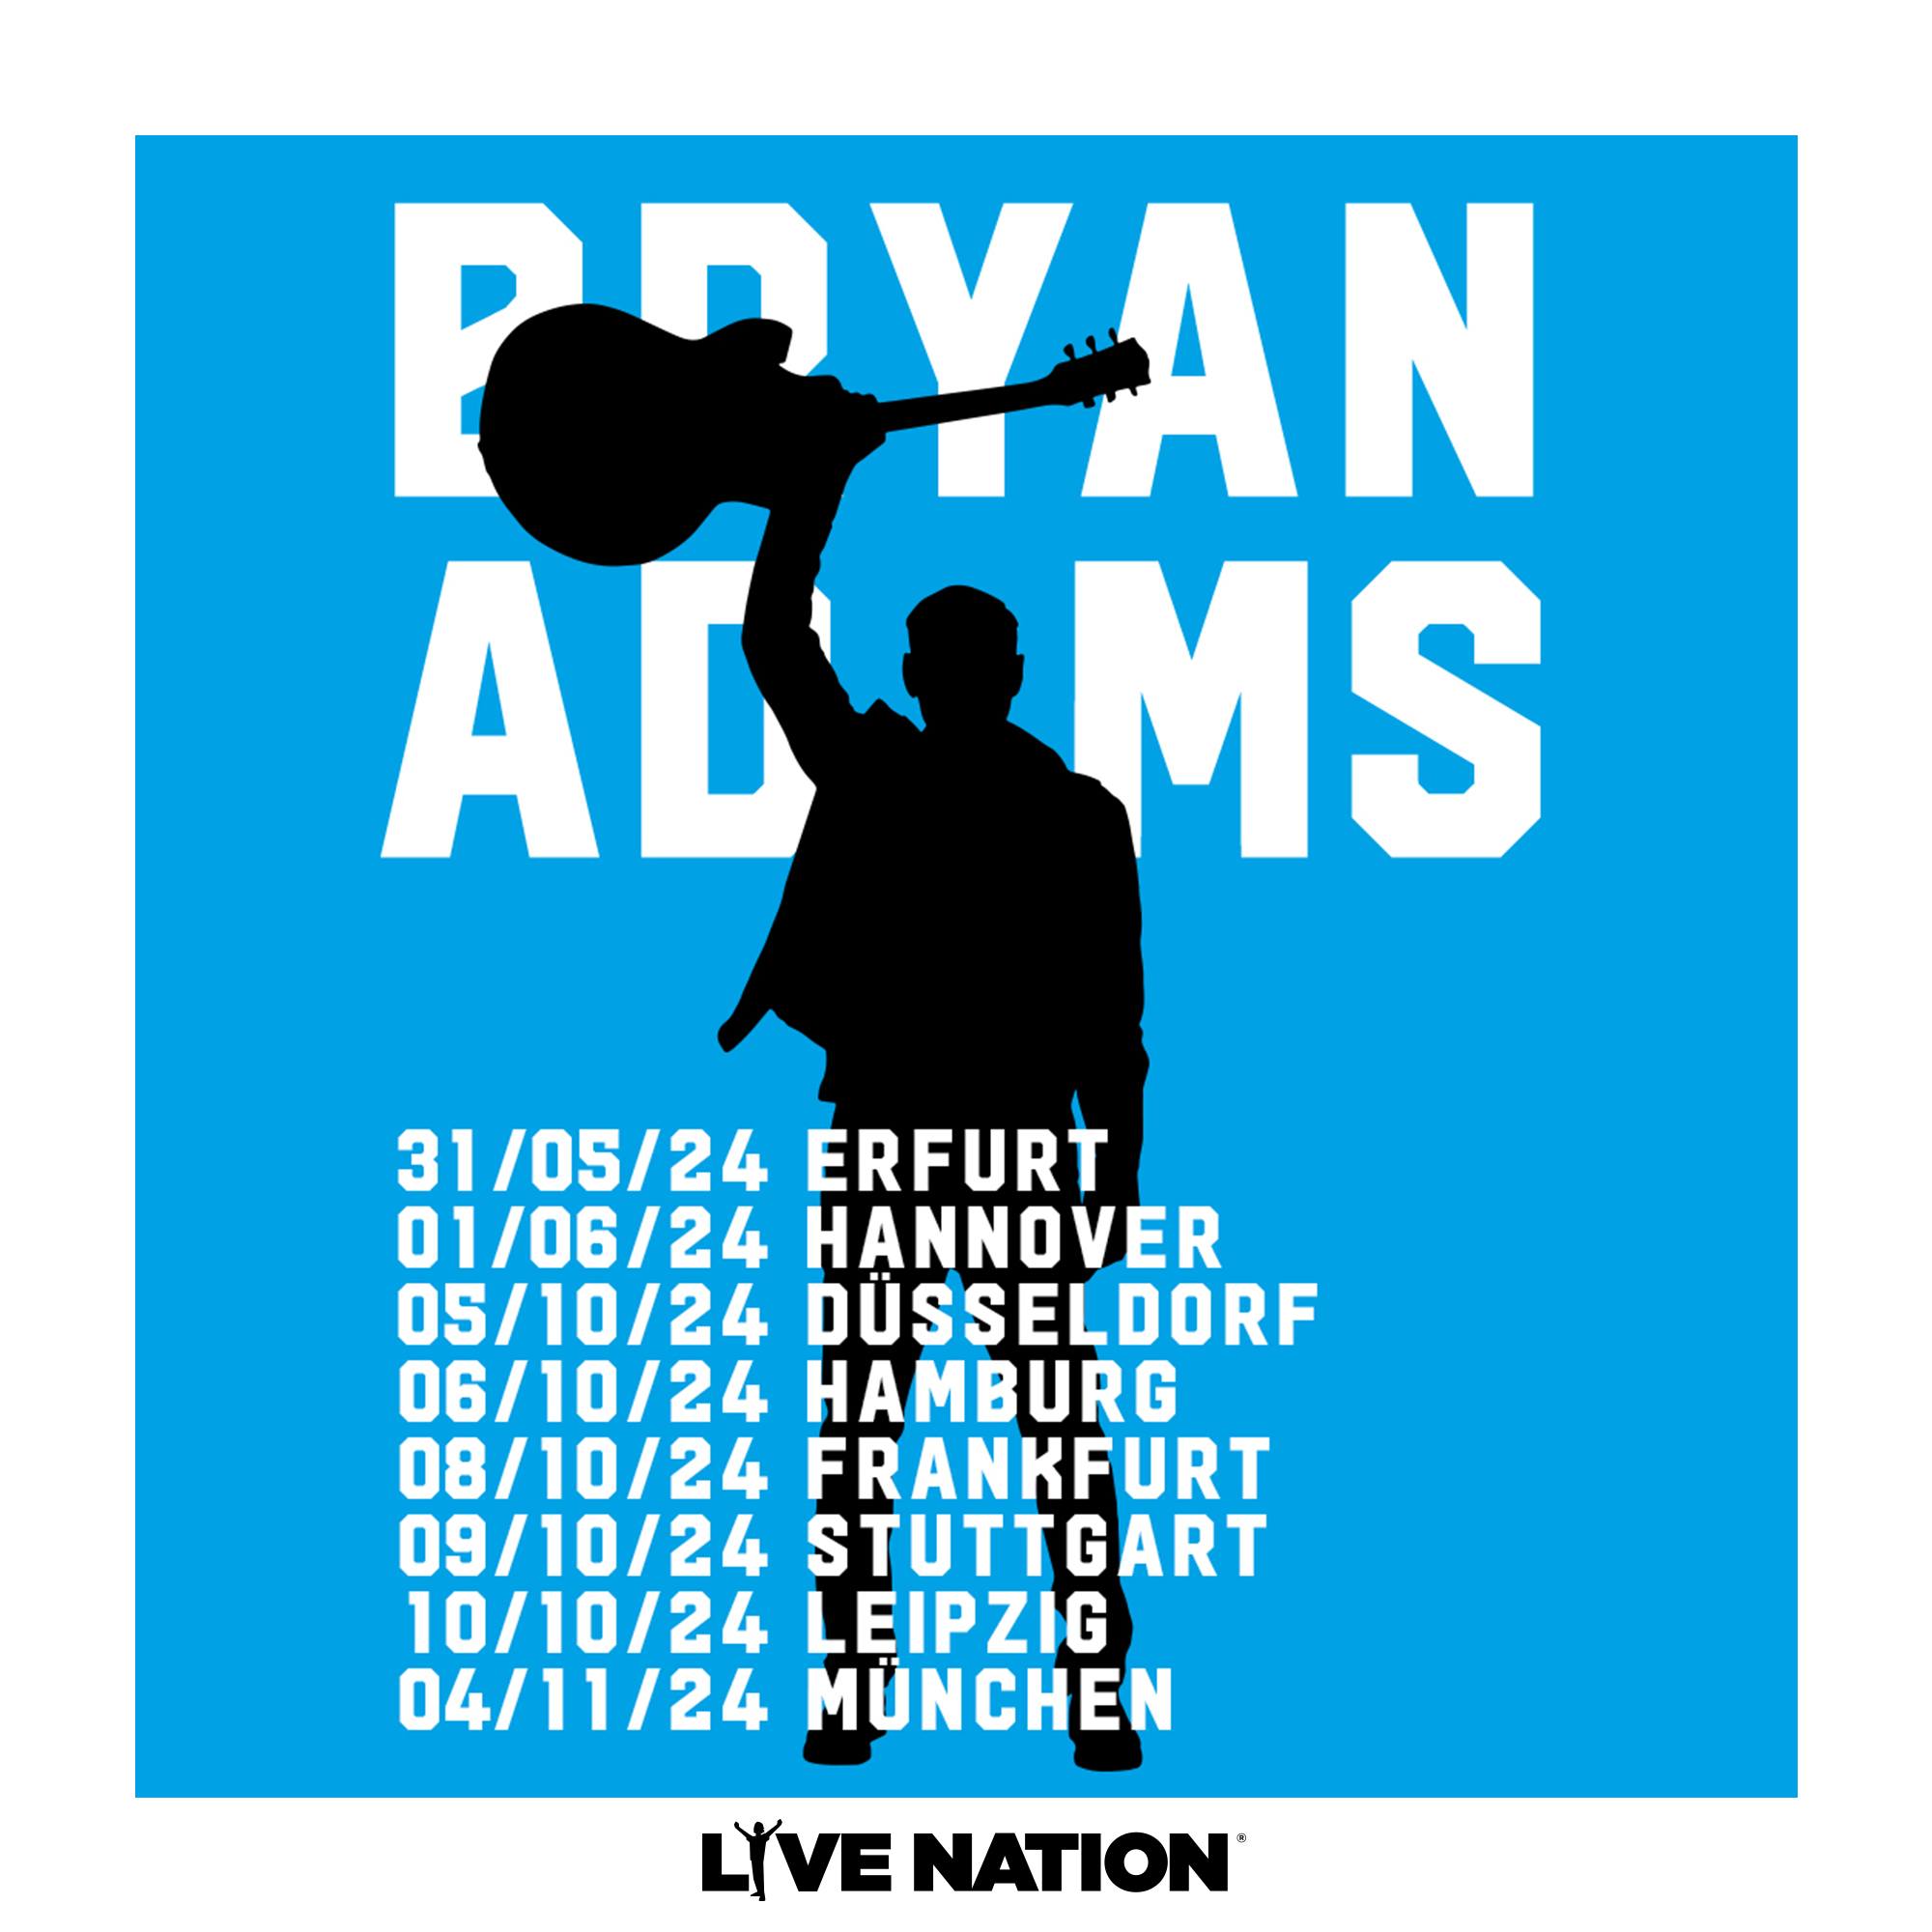 Bryan Adams at Barclays Arena Tickets